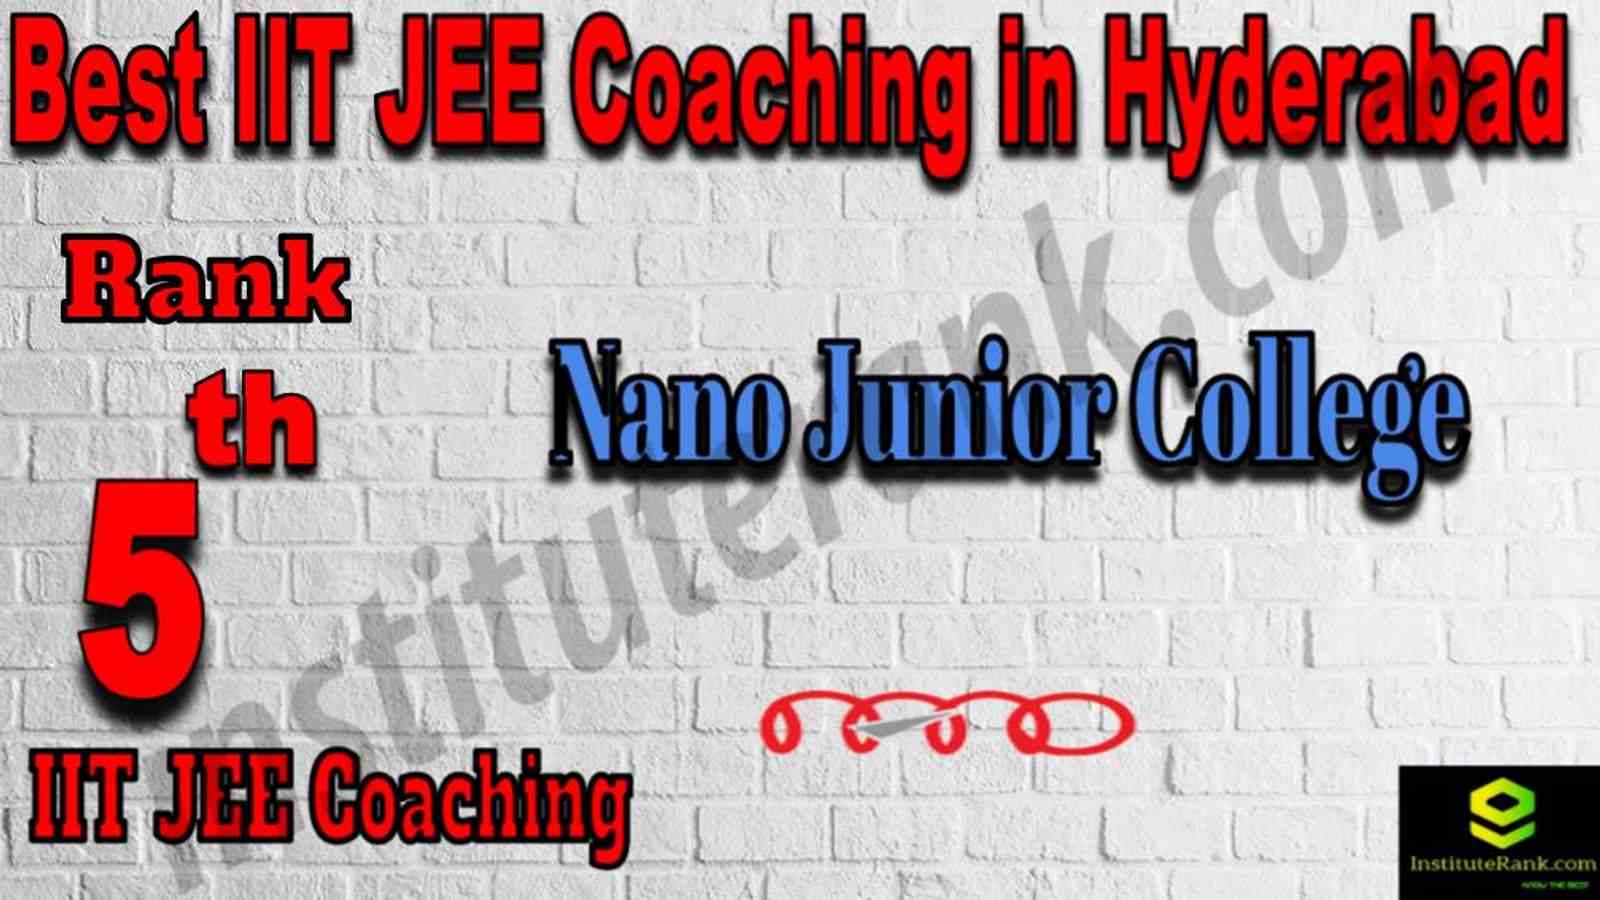 5th Best IIT JEE Coaching in Hyderabad